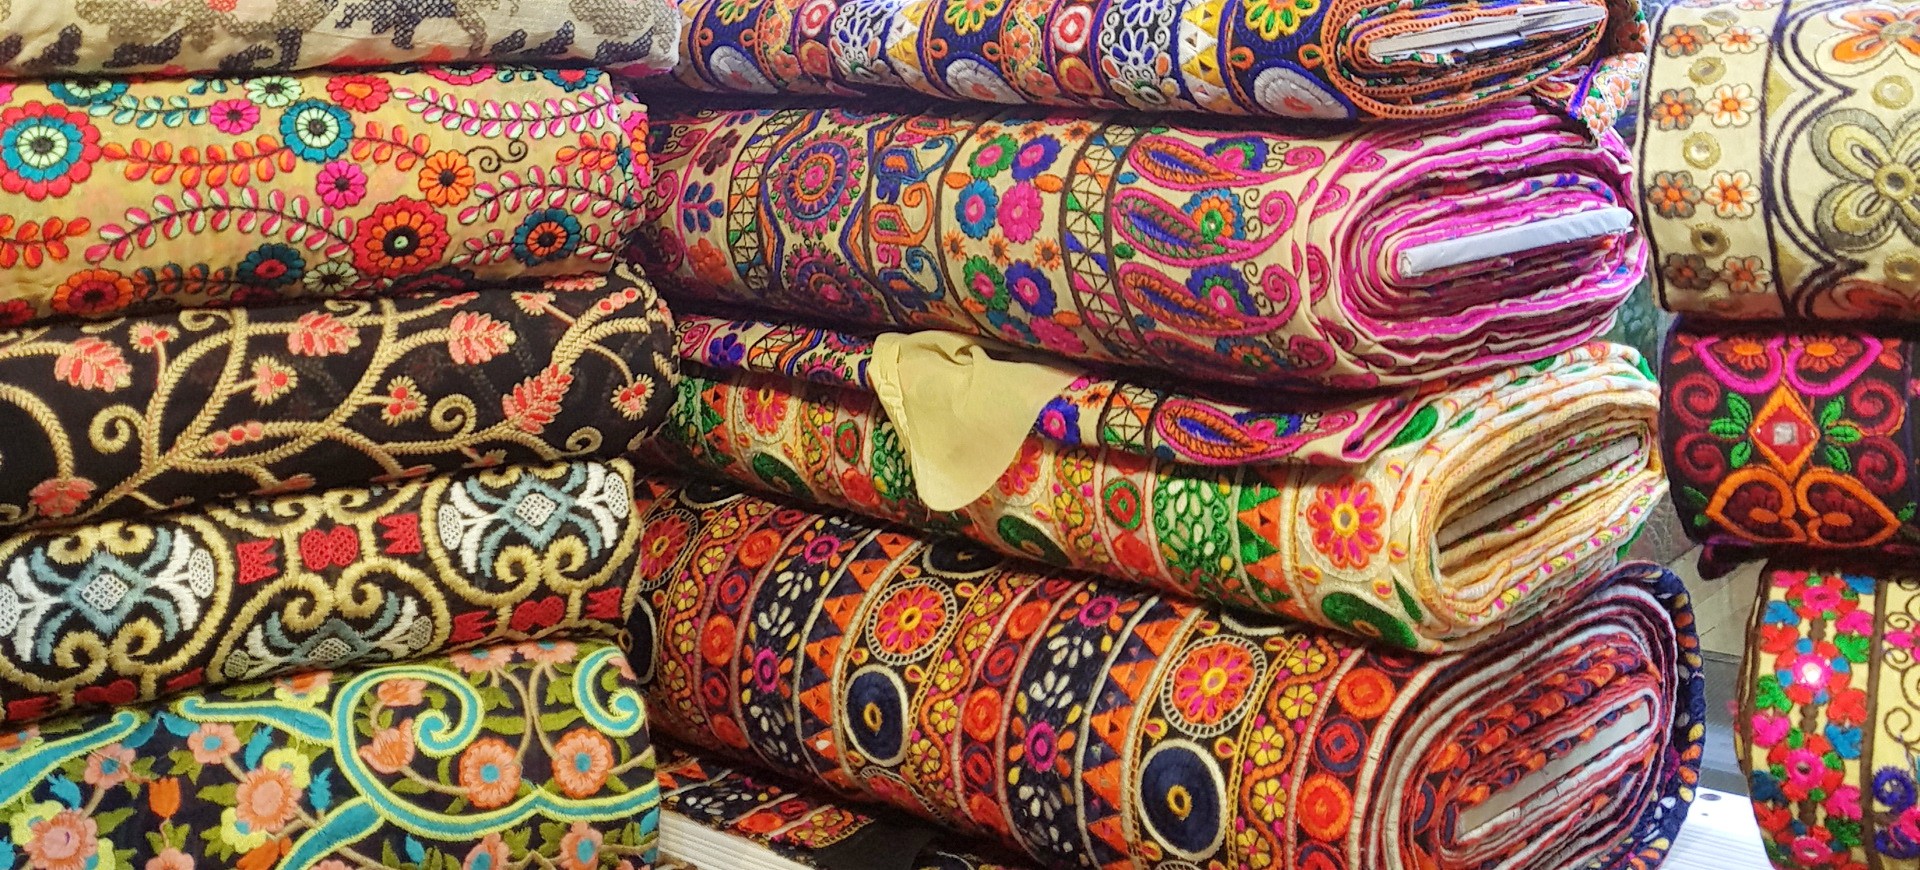 Bazar à Téhéran en Iran